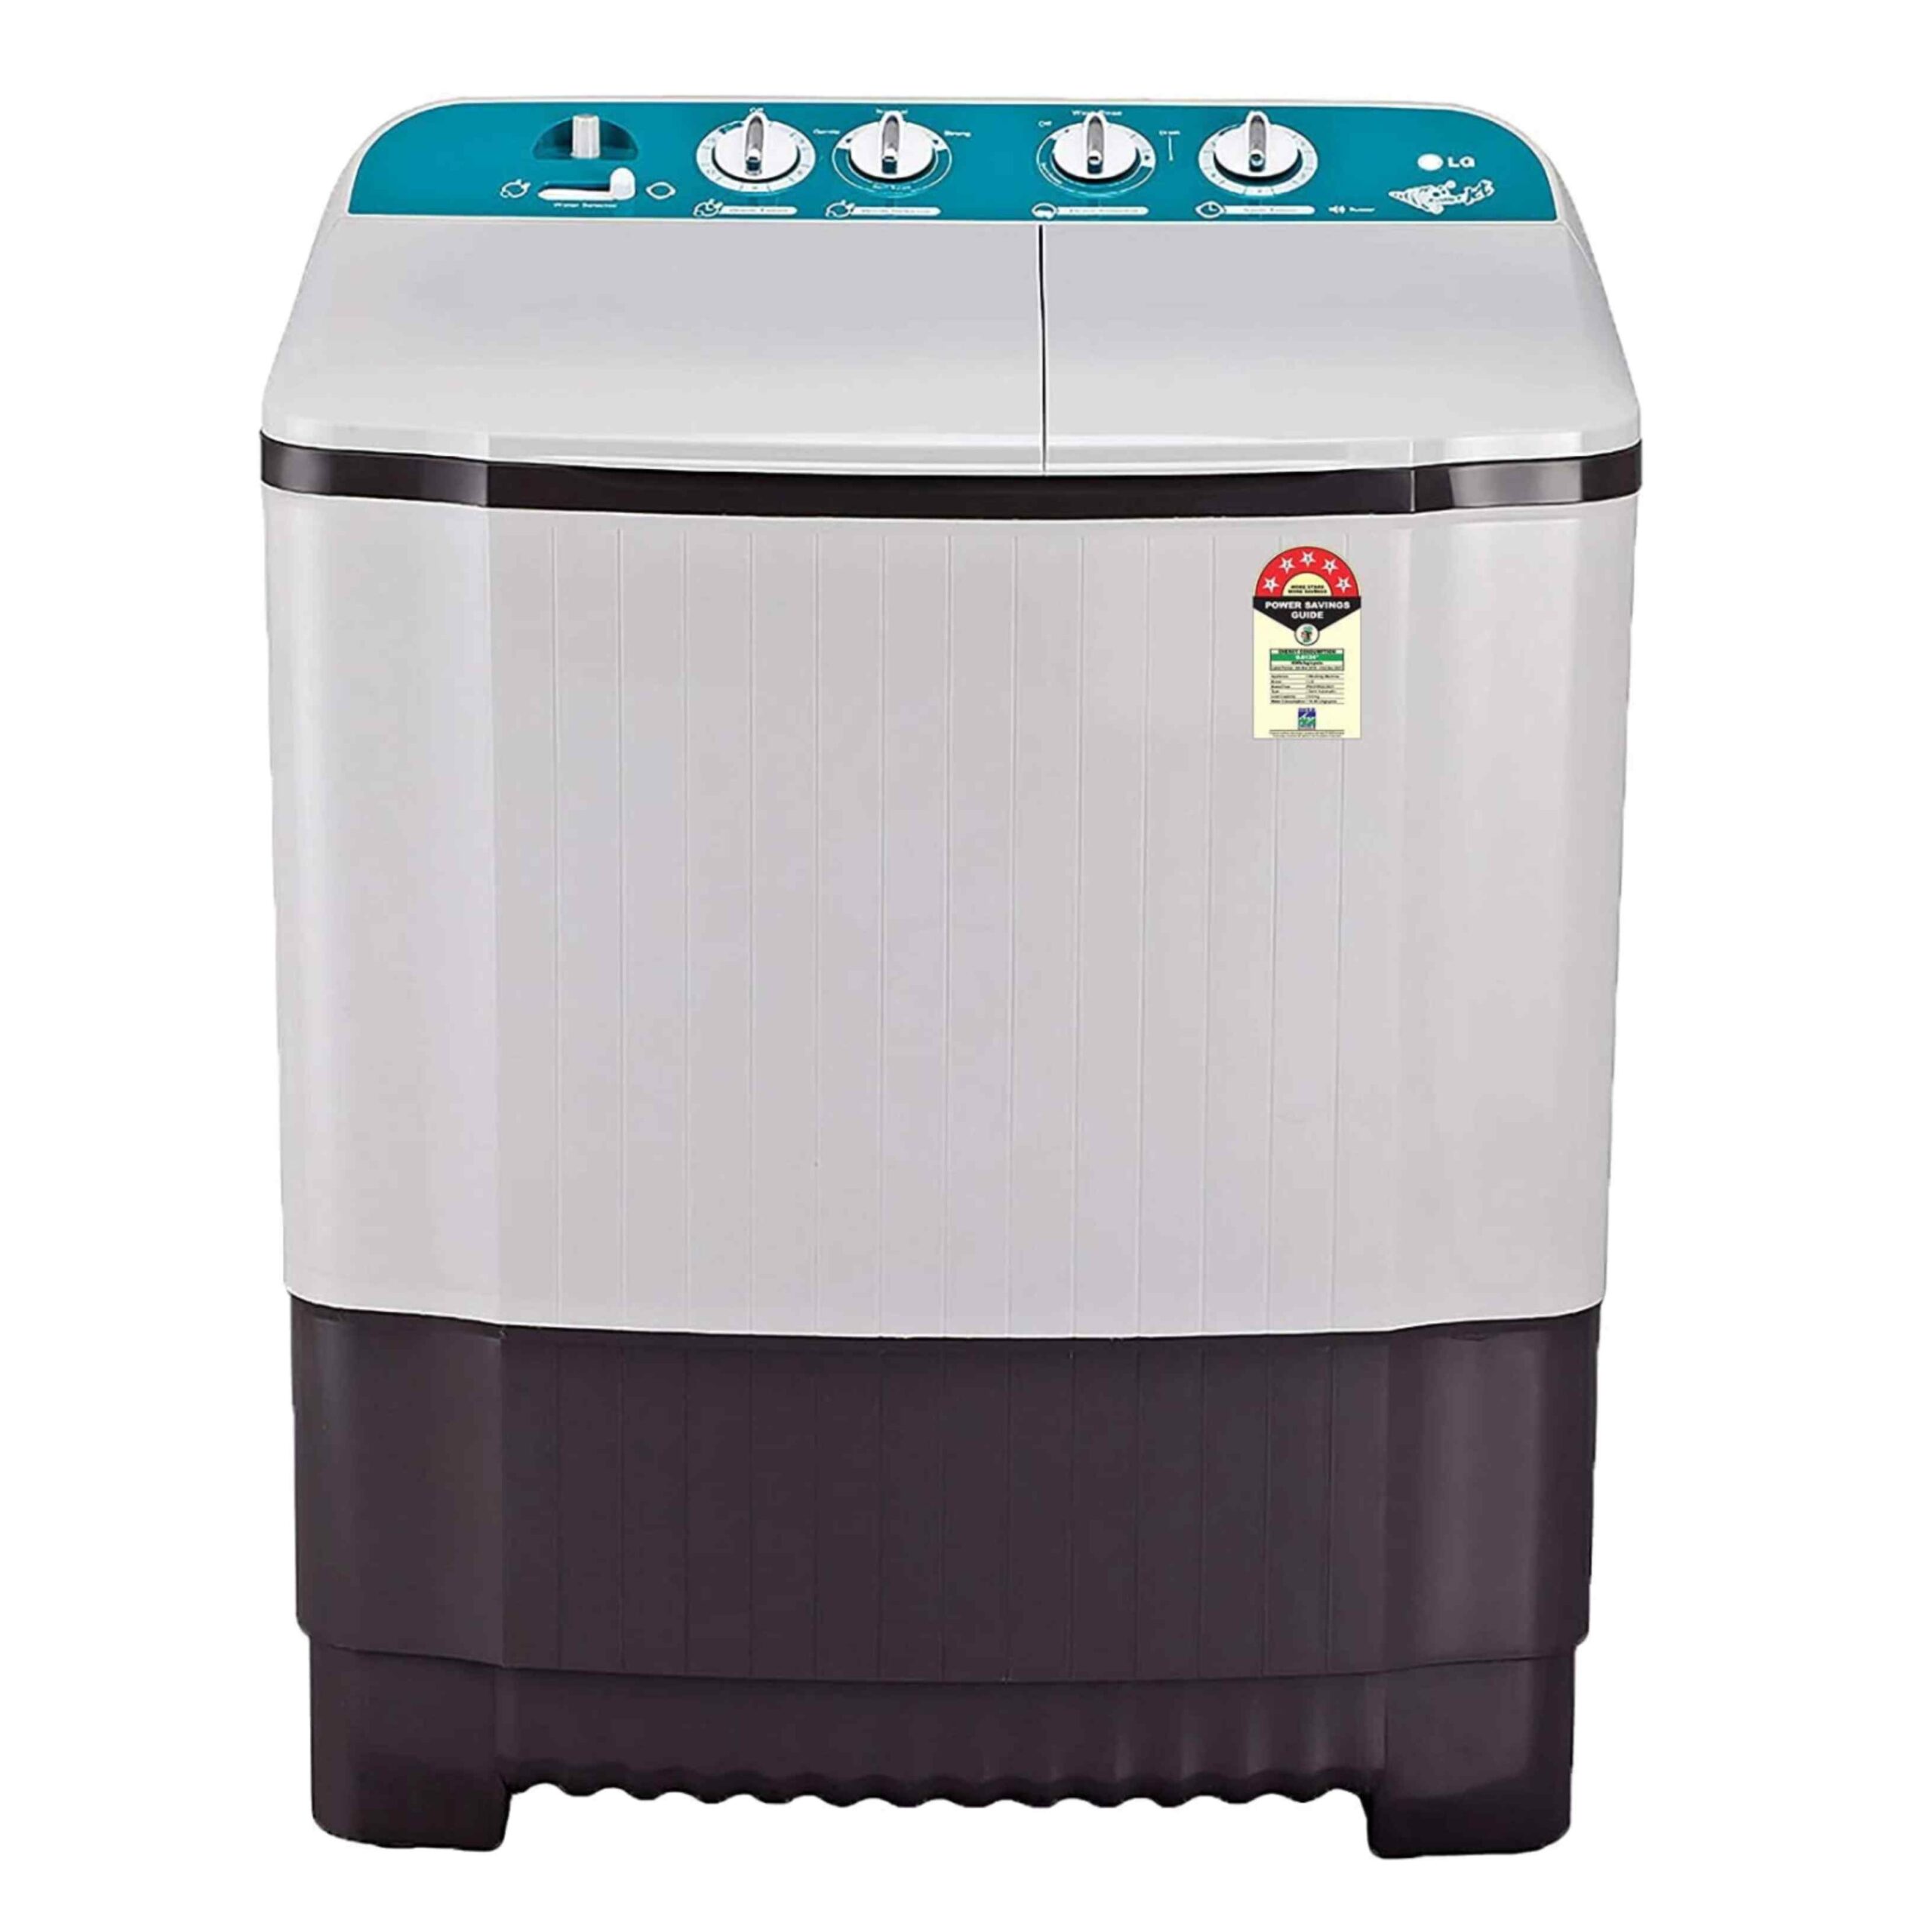 LG P6001RGZ 6 Kg washing machine Price and Availability